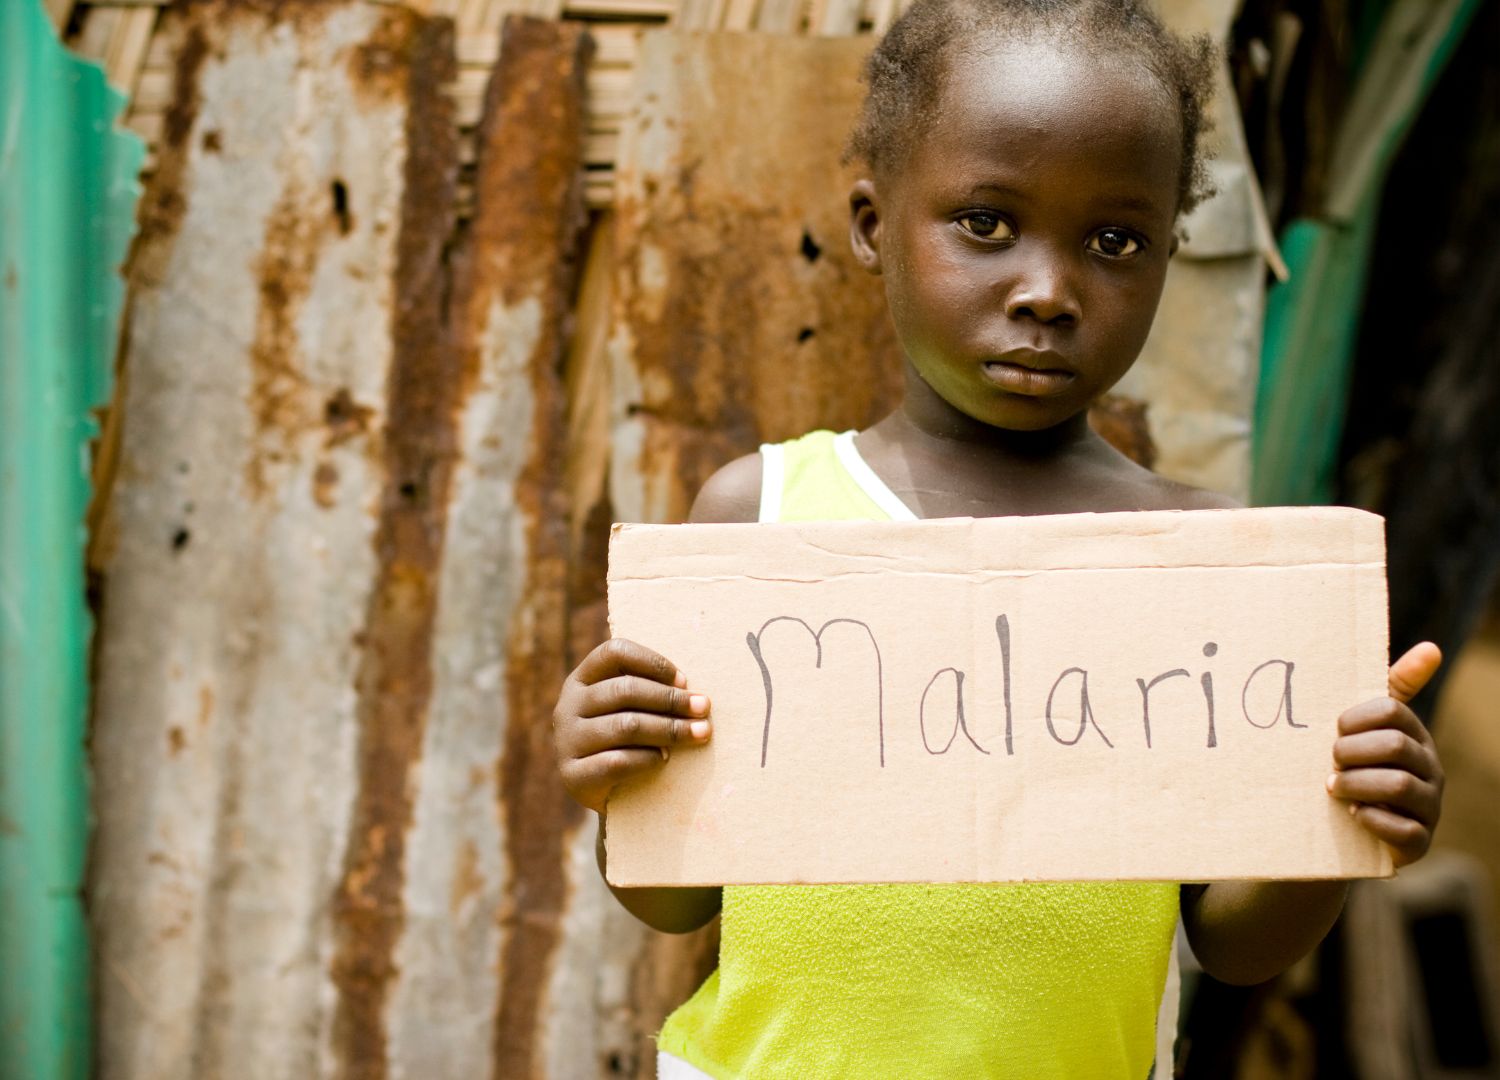 Symptoms and Treatment of Malaria in Children